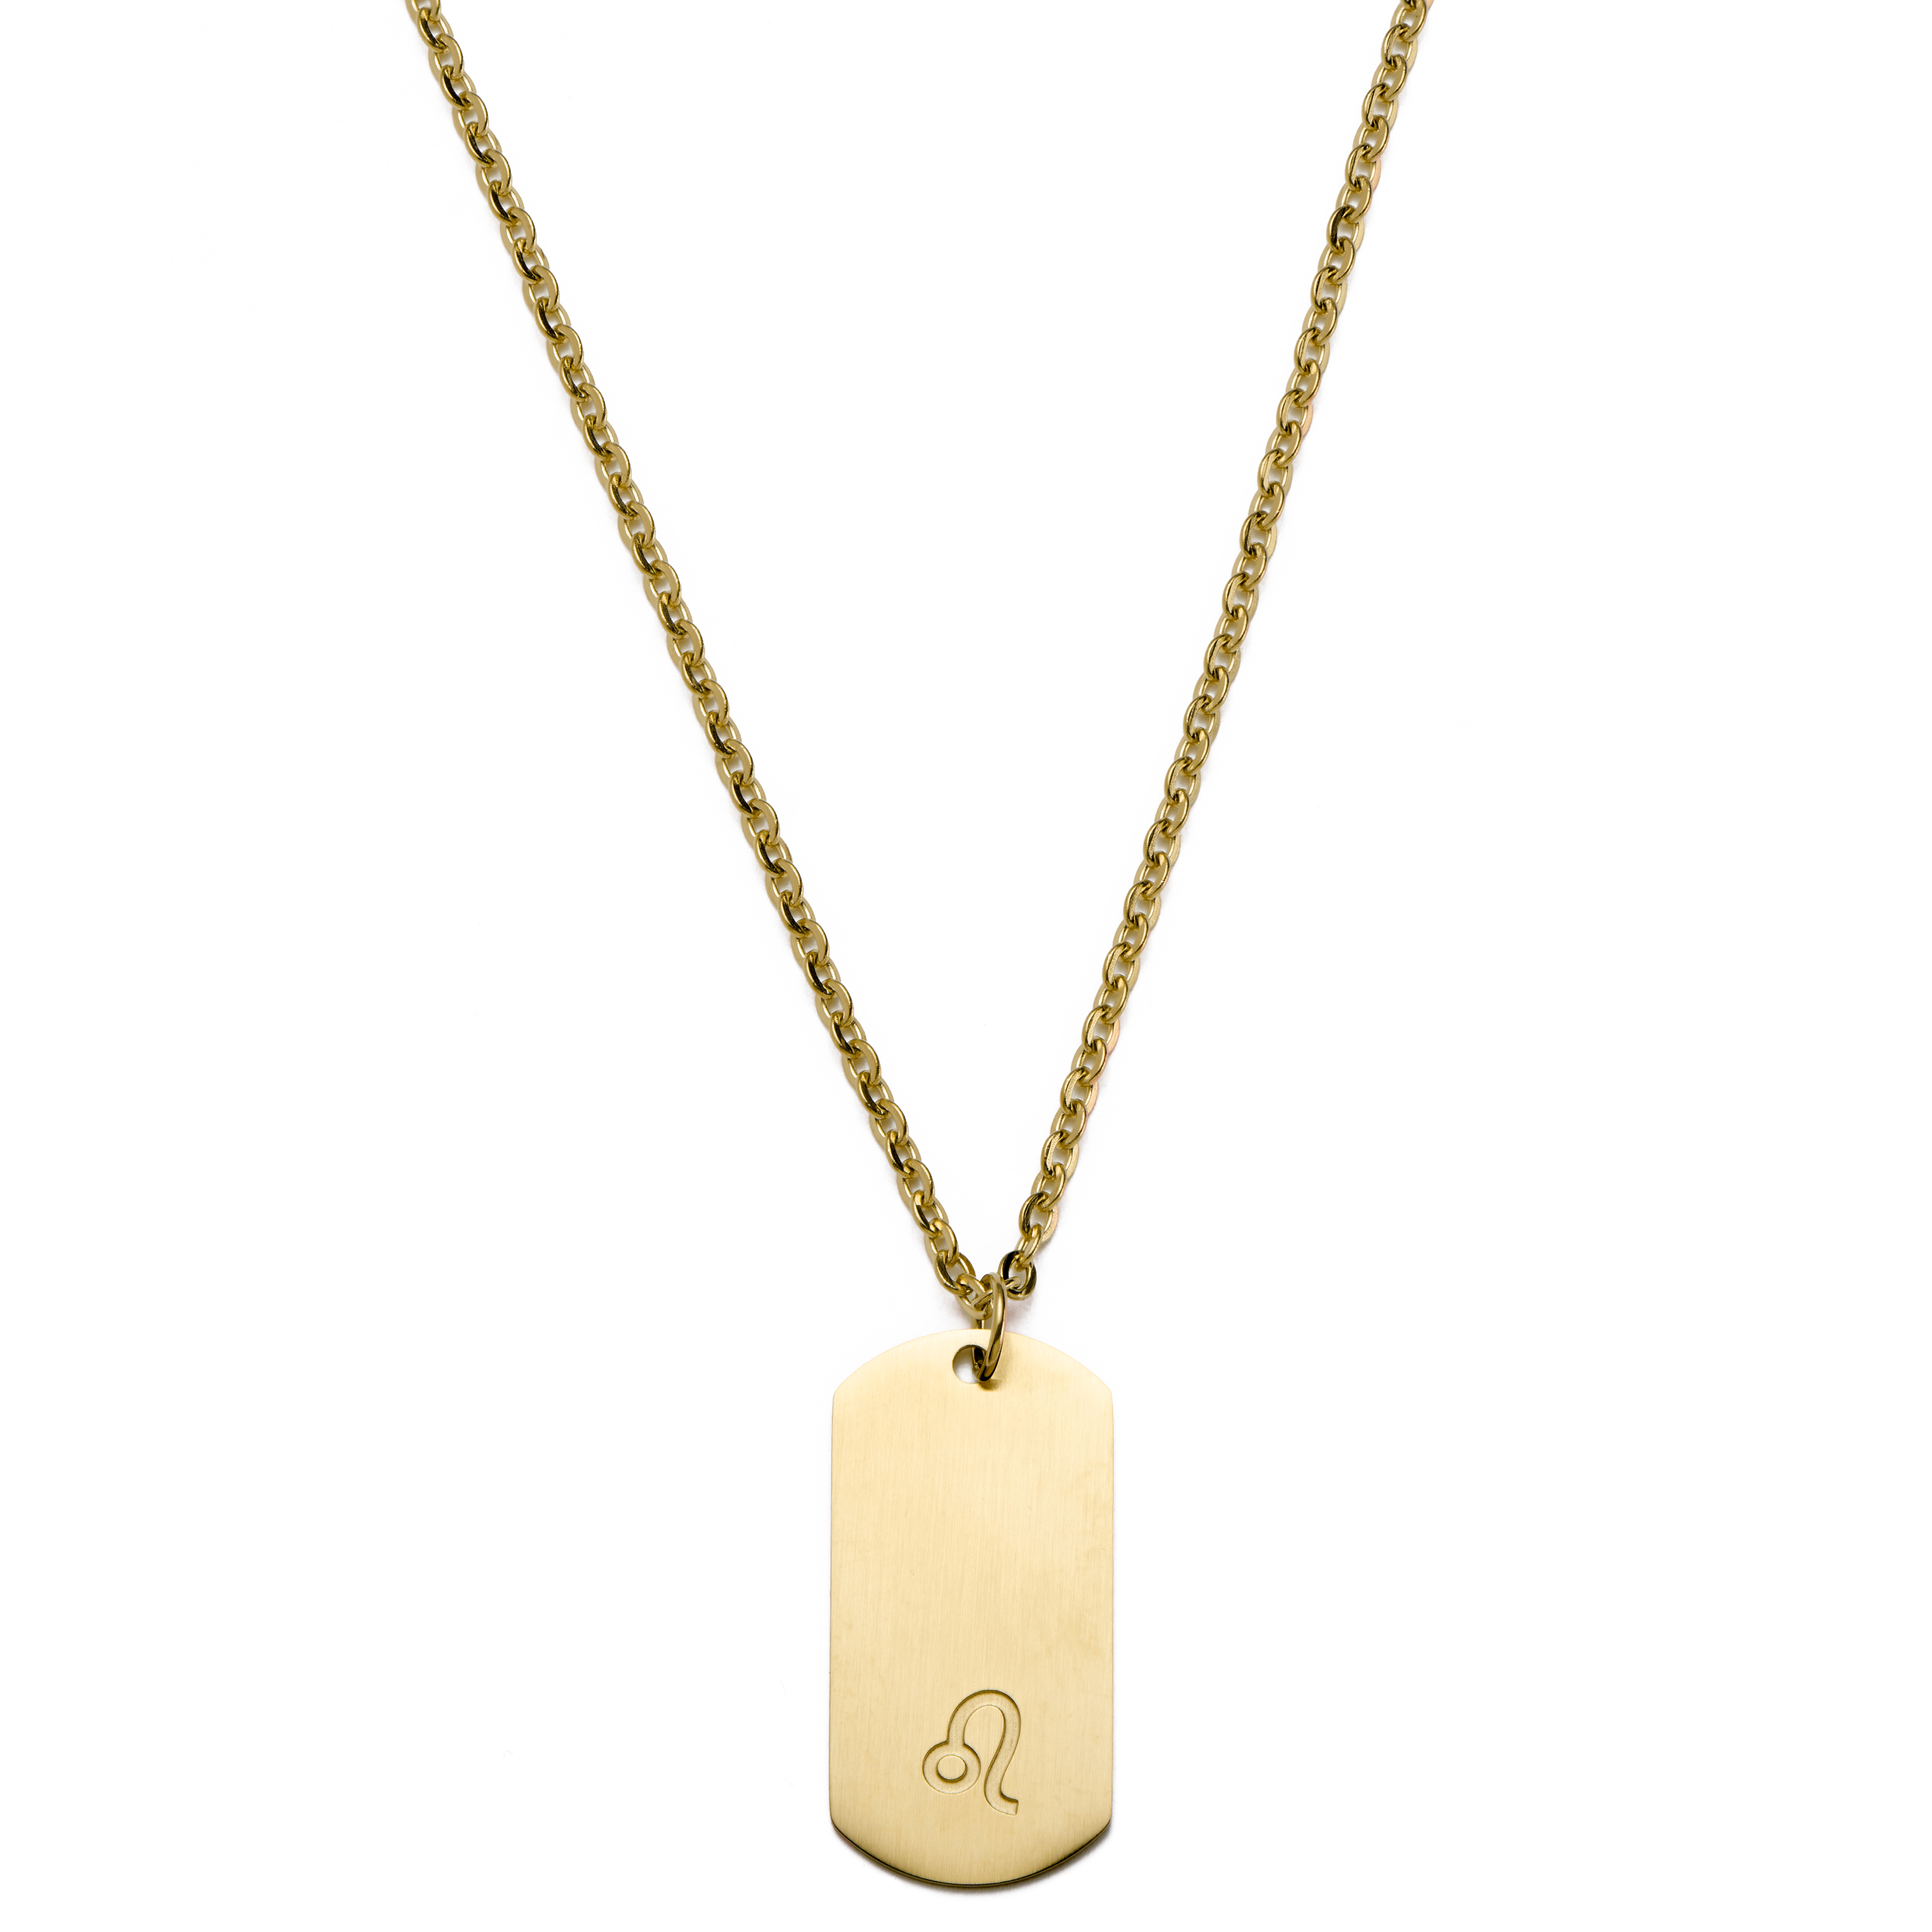 Poplins Leo Zodiac Star Sign Necklace Pendant for Girls / Women - Gold